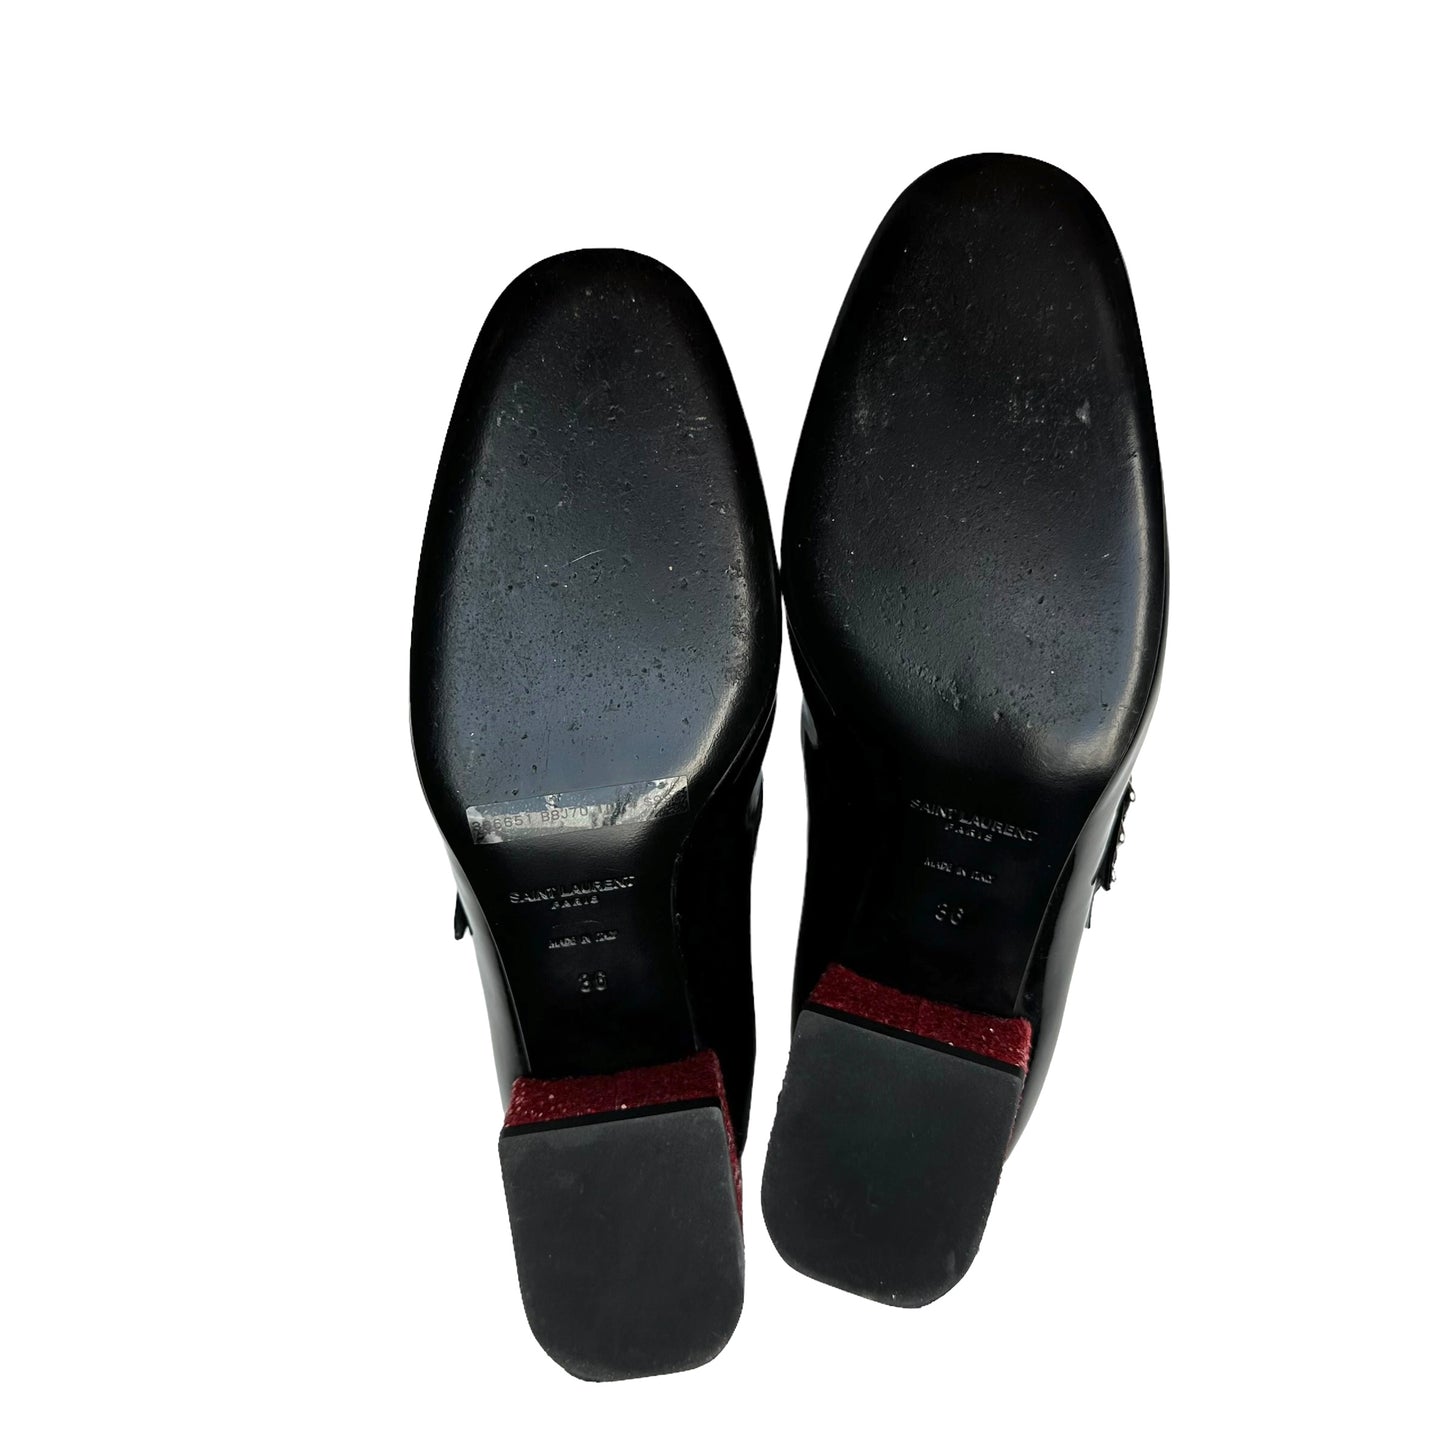 Black Patent Heels - 6.5